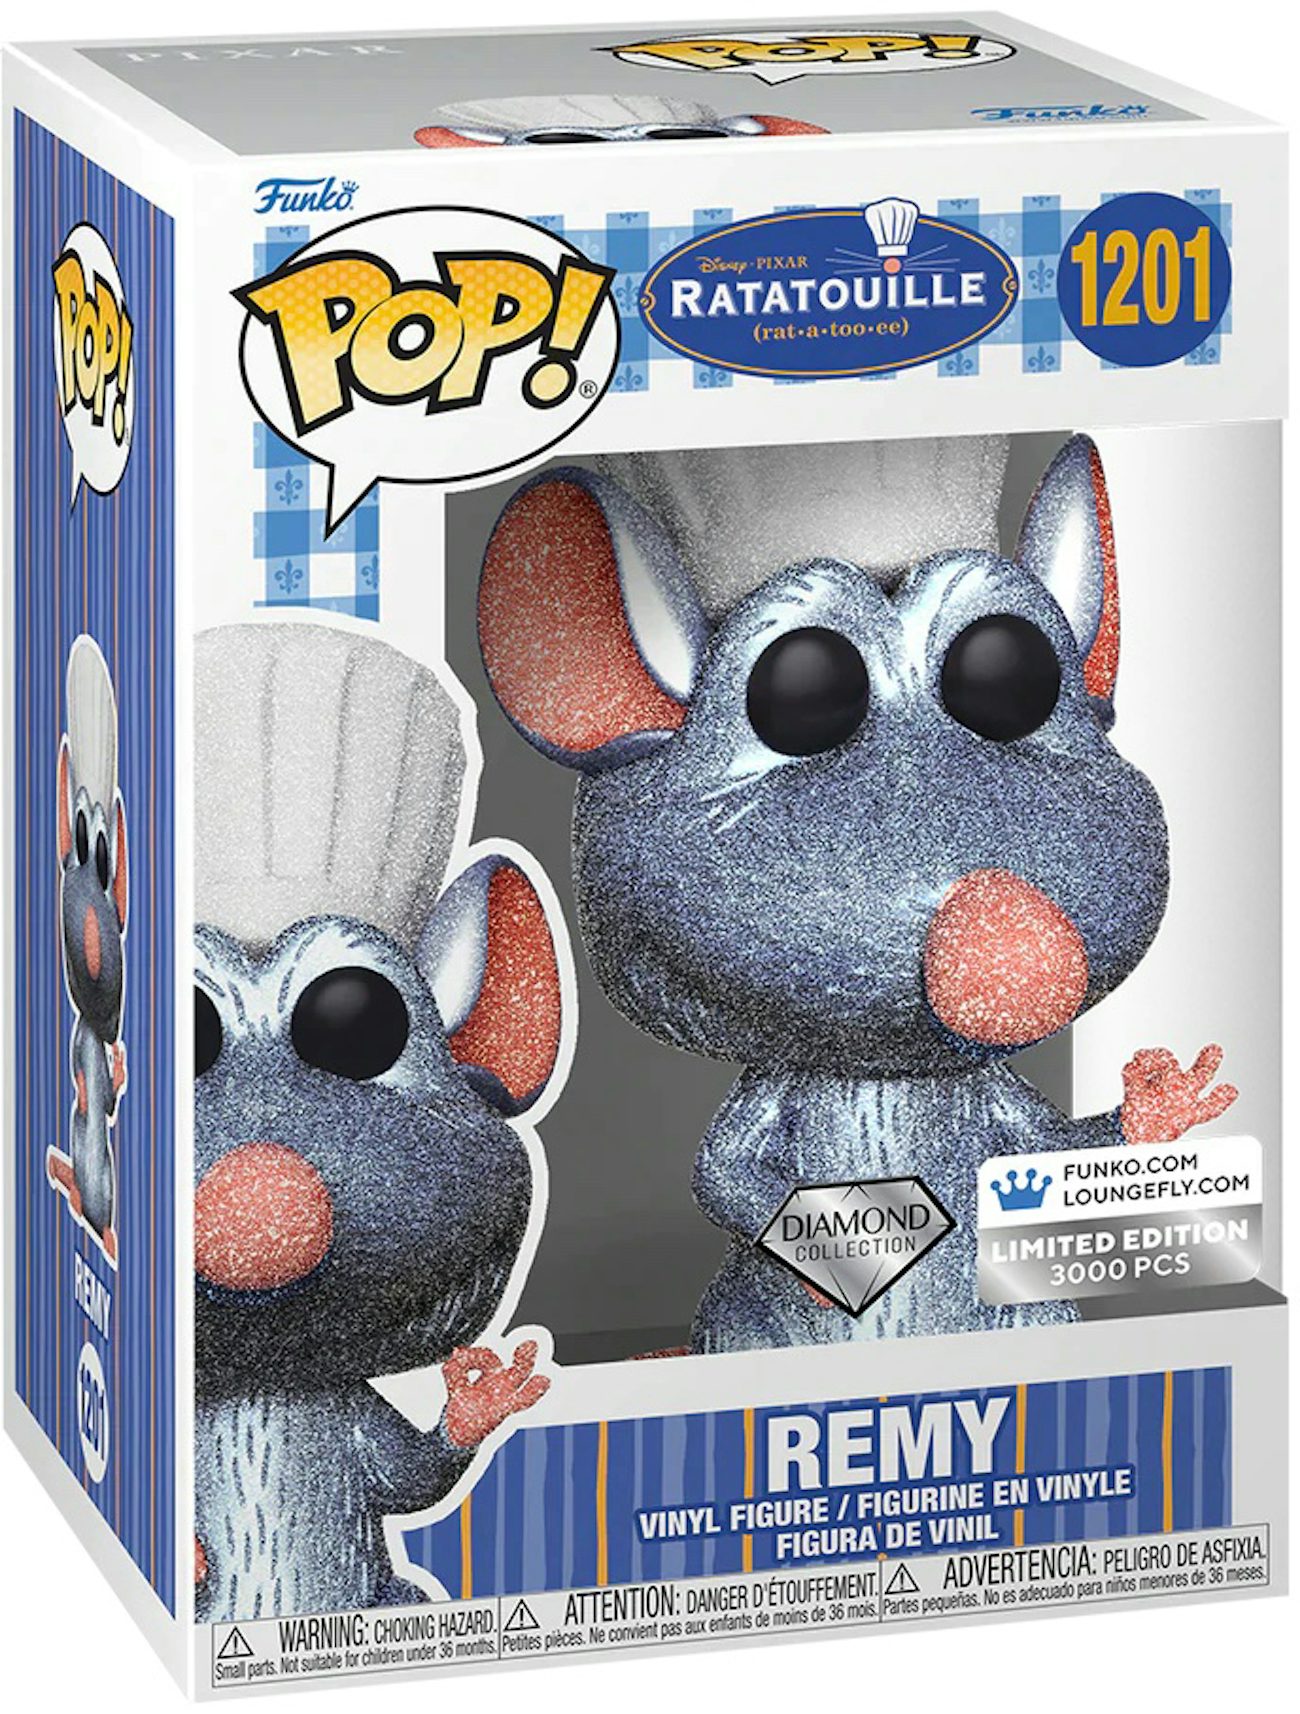 Rato Pet - #EuQuero #Remy #LiveAction Ratatouille Funko POP